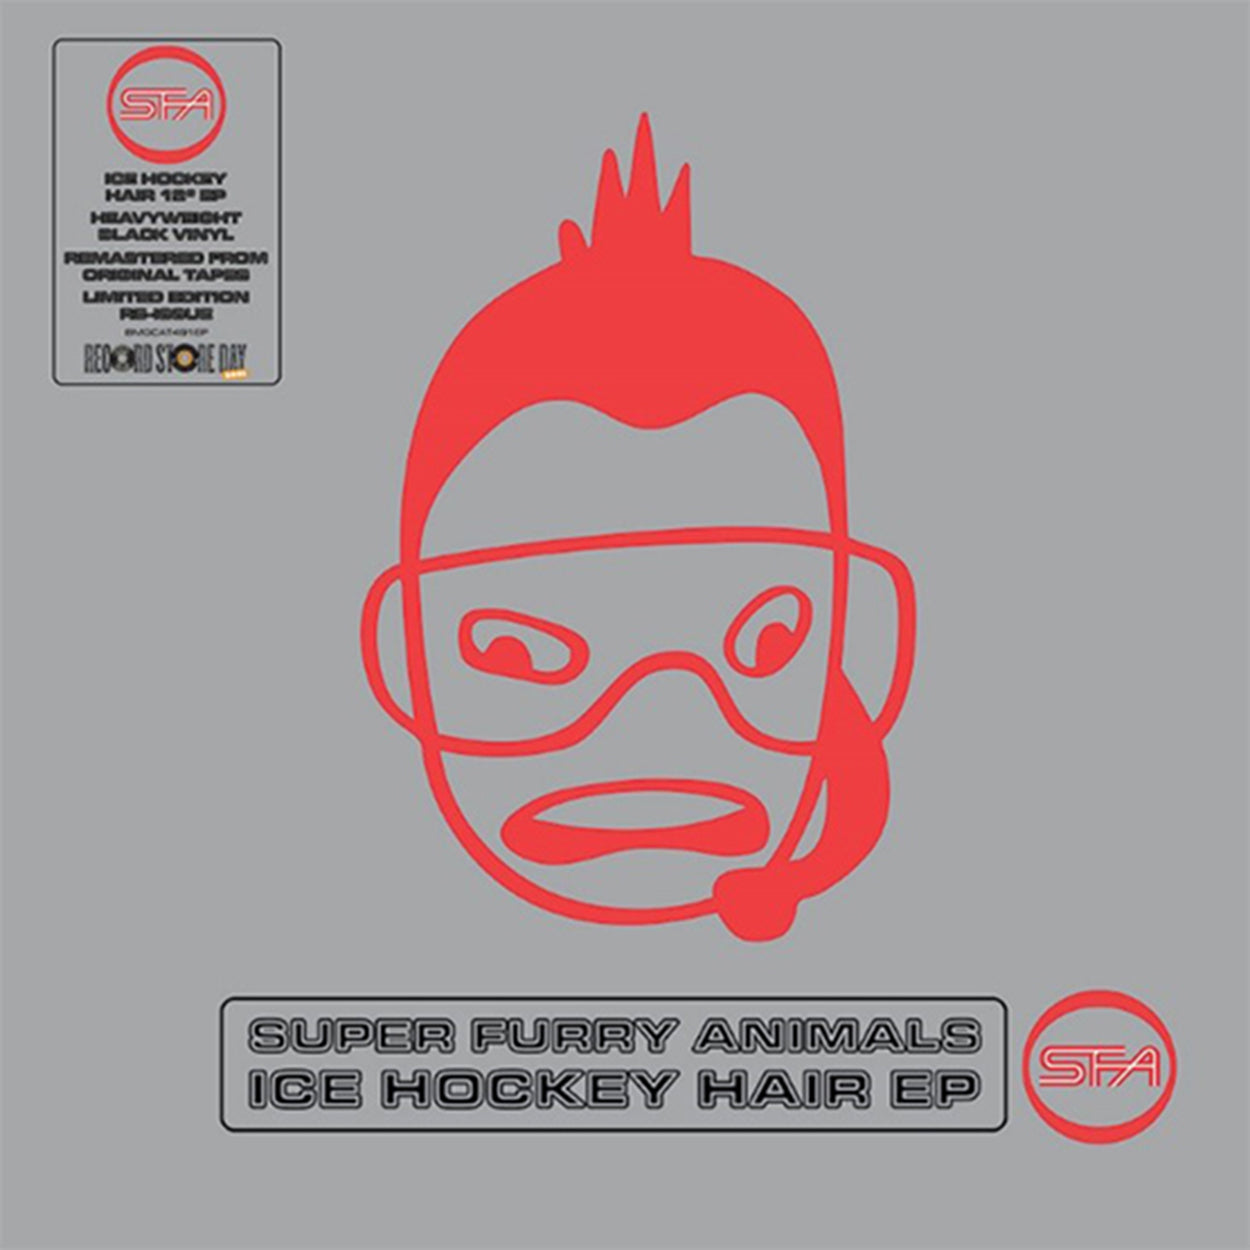 SUPER FURRY ANIMALS - Ice Hockey Hair EP (Remastered) - 12" - 180g Vinyl [RSD2021-JUN12]